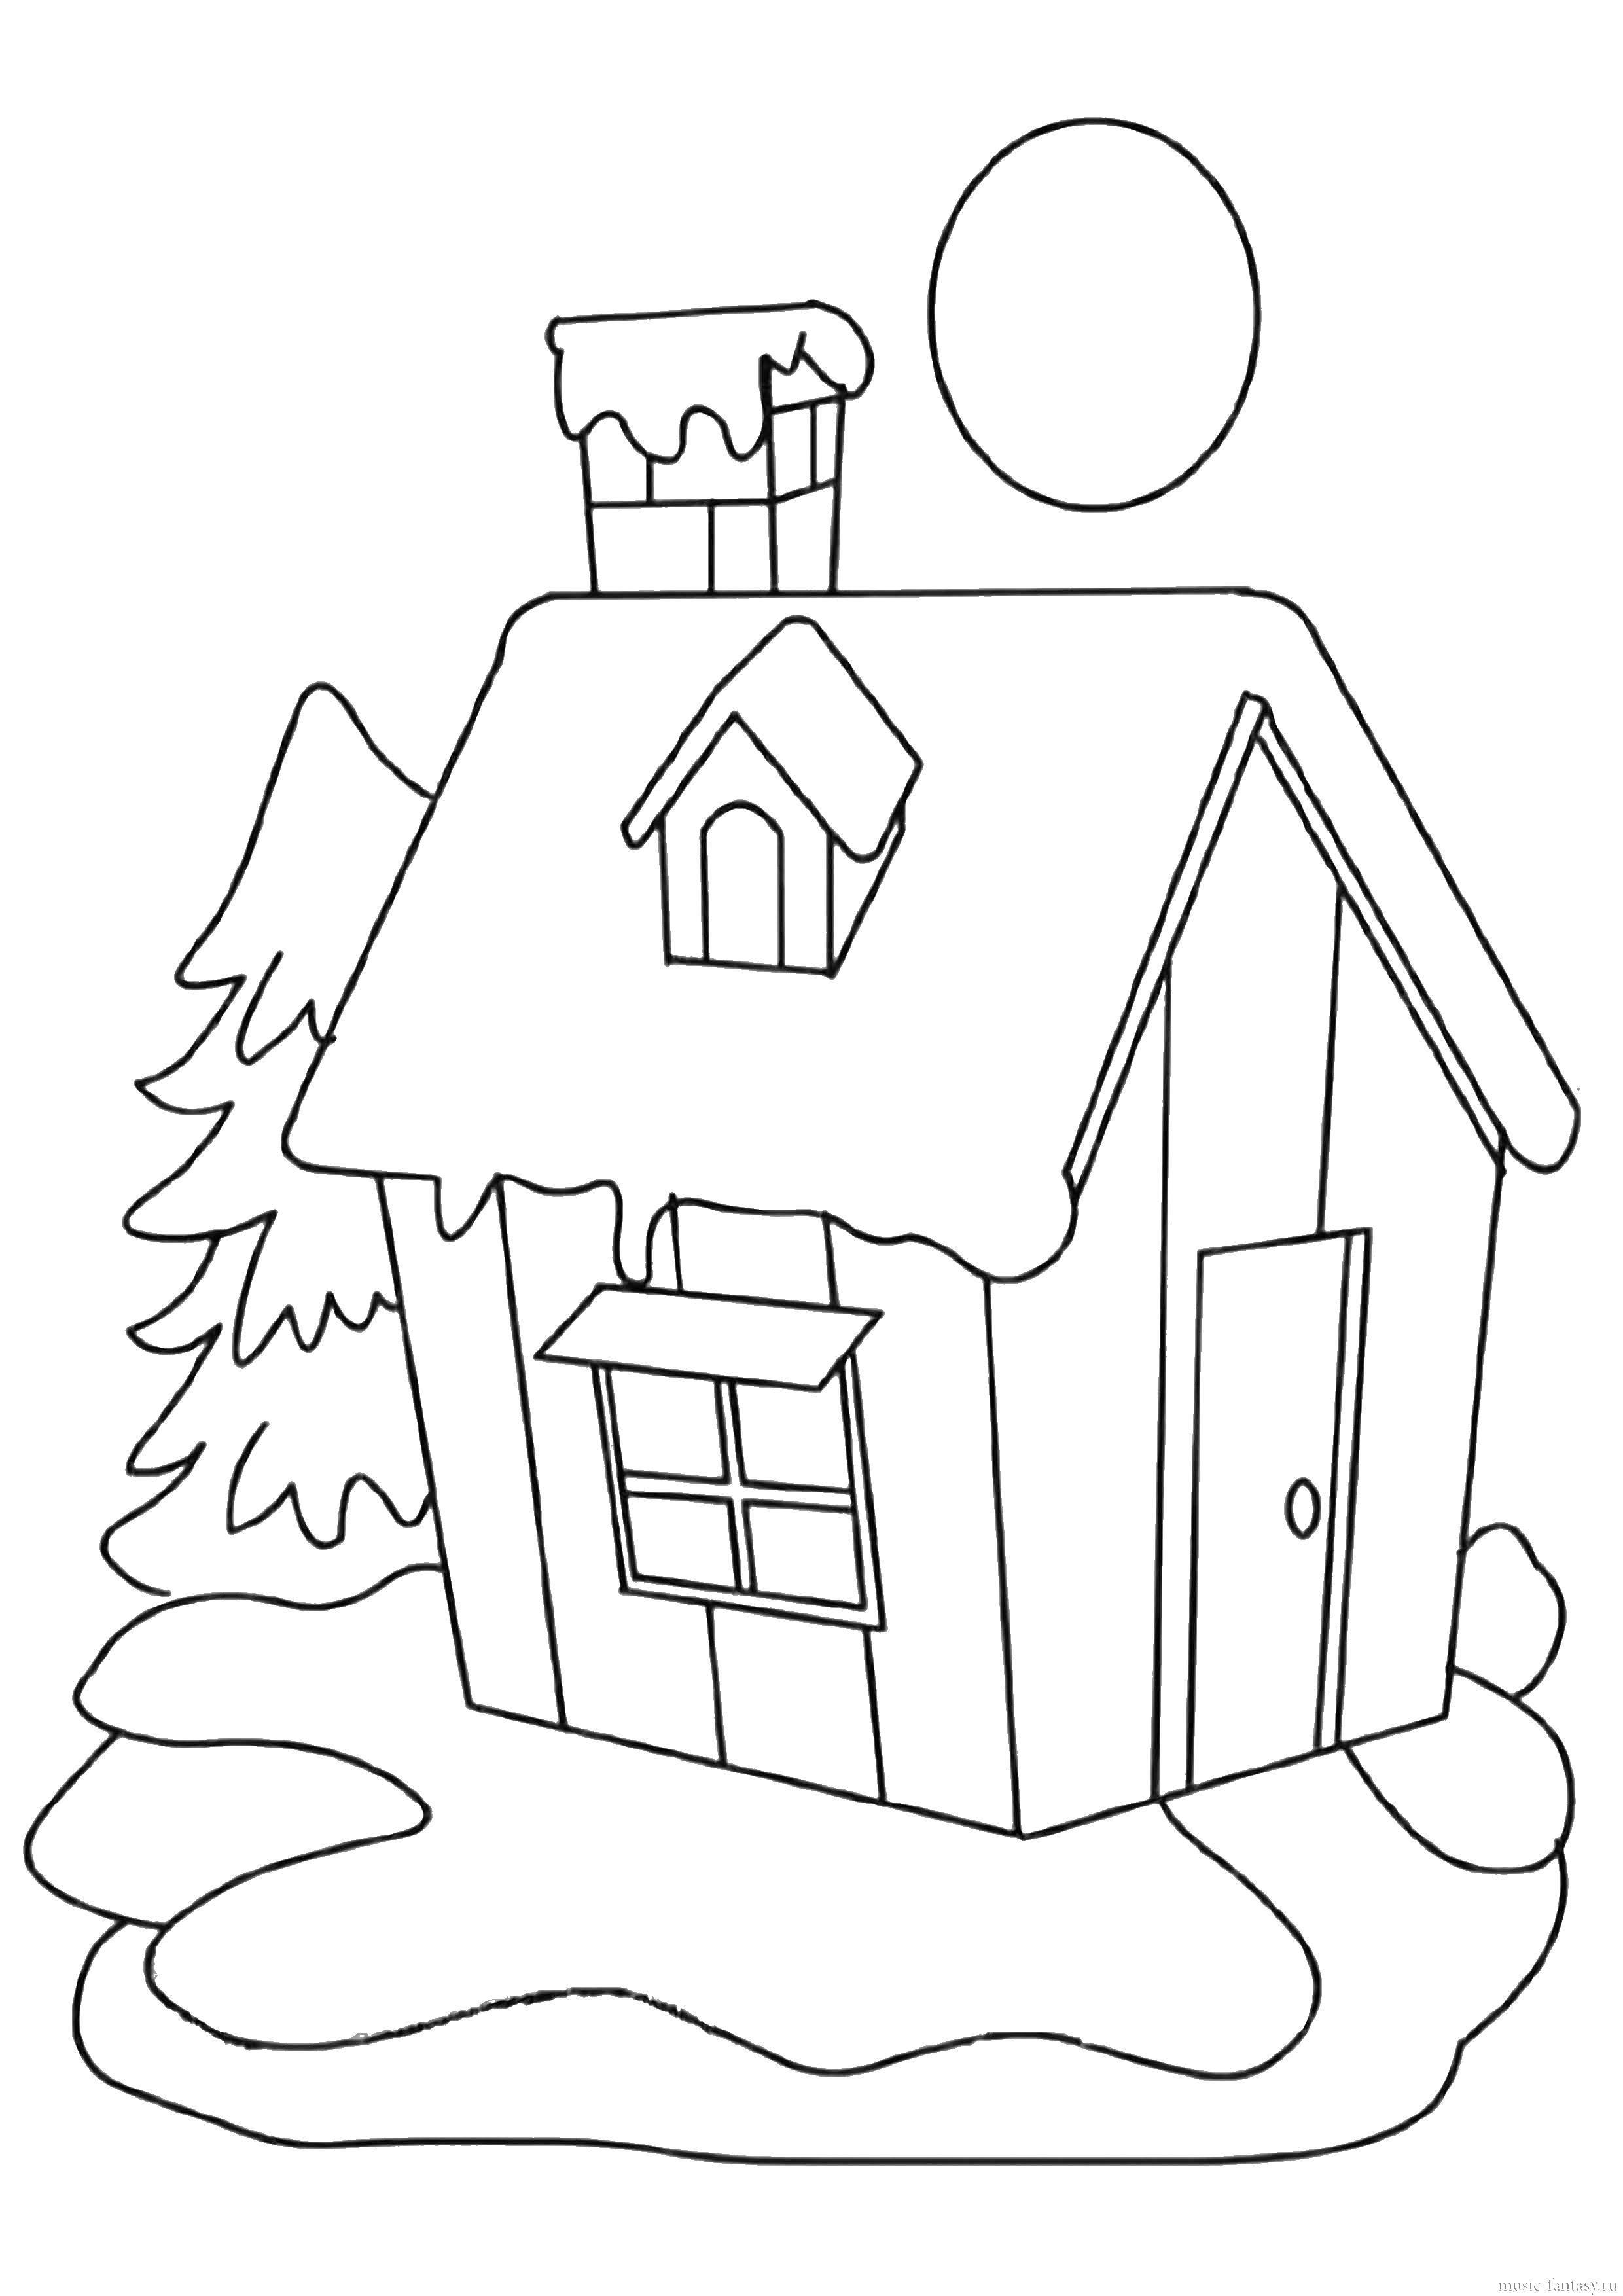 Название: Раскраска Домик в снегу и елка. Категория: деревня. Теги: дом, снег, елка.